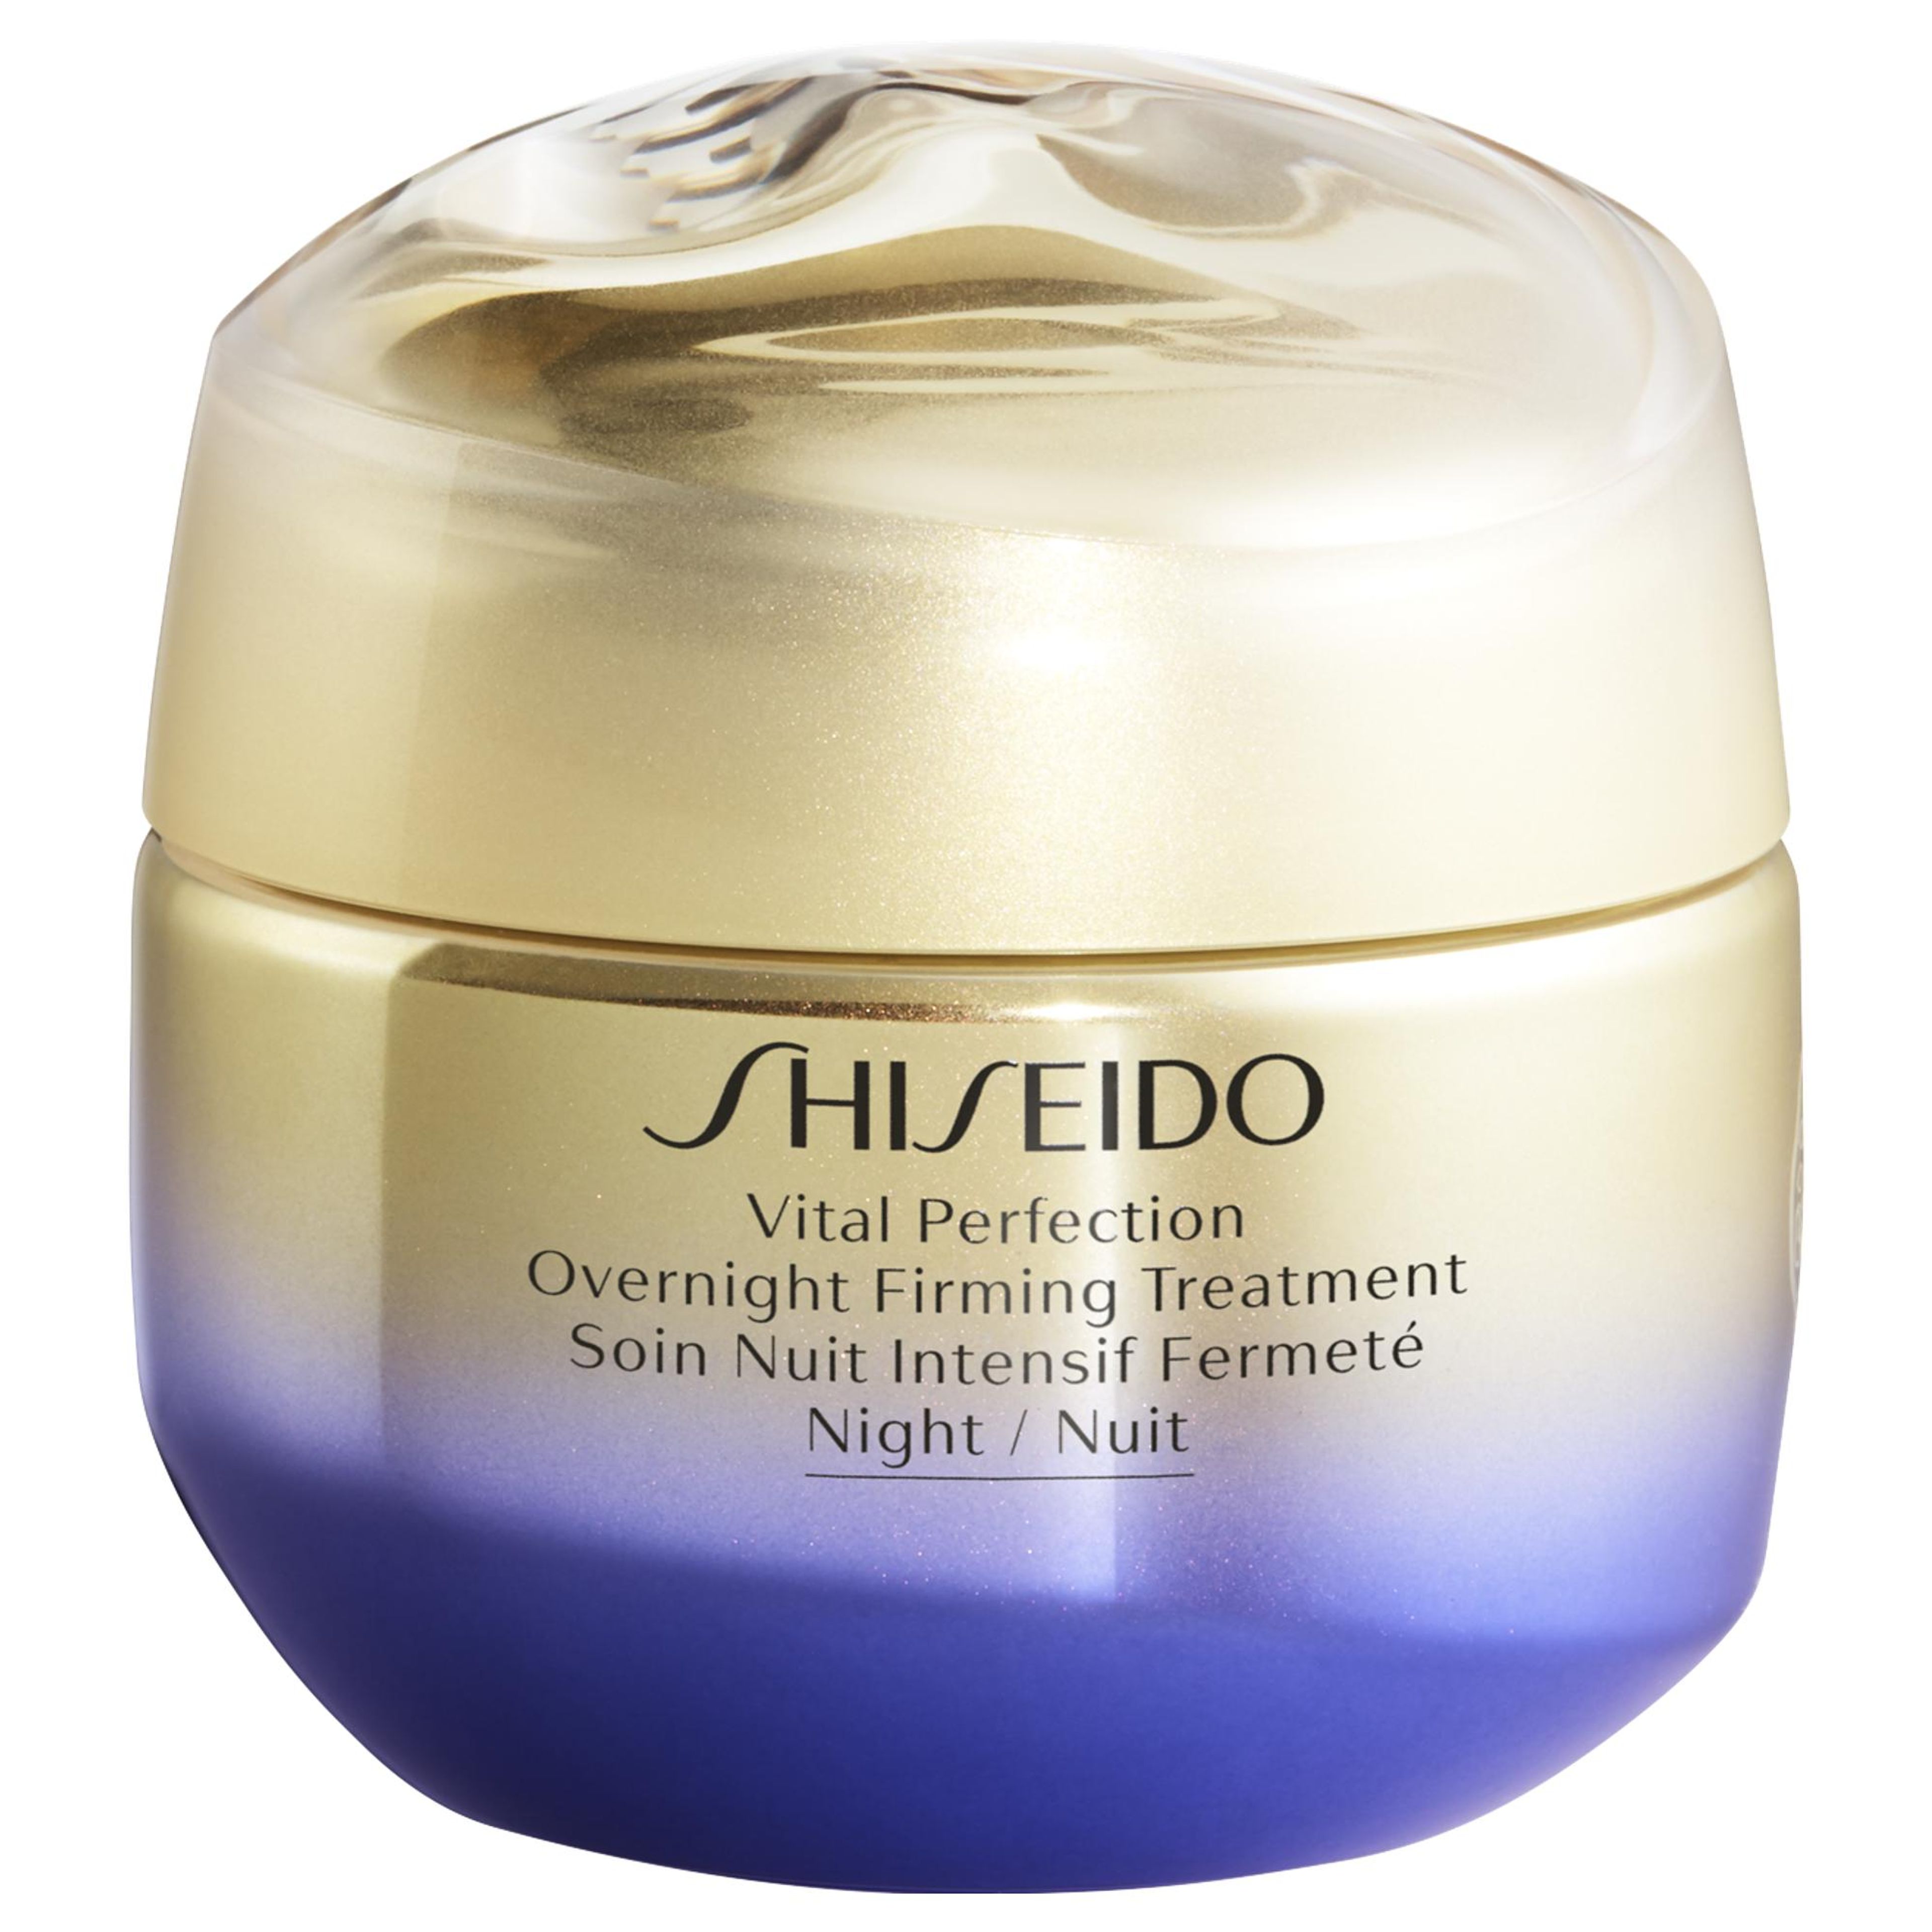 Shiseido Overnight Firming Treatment 1